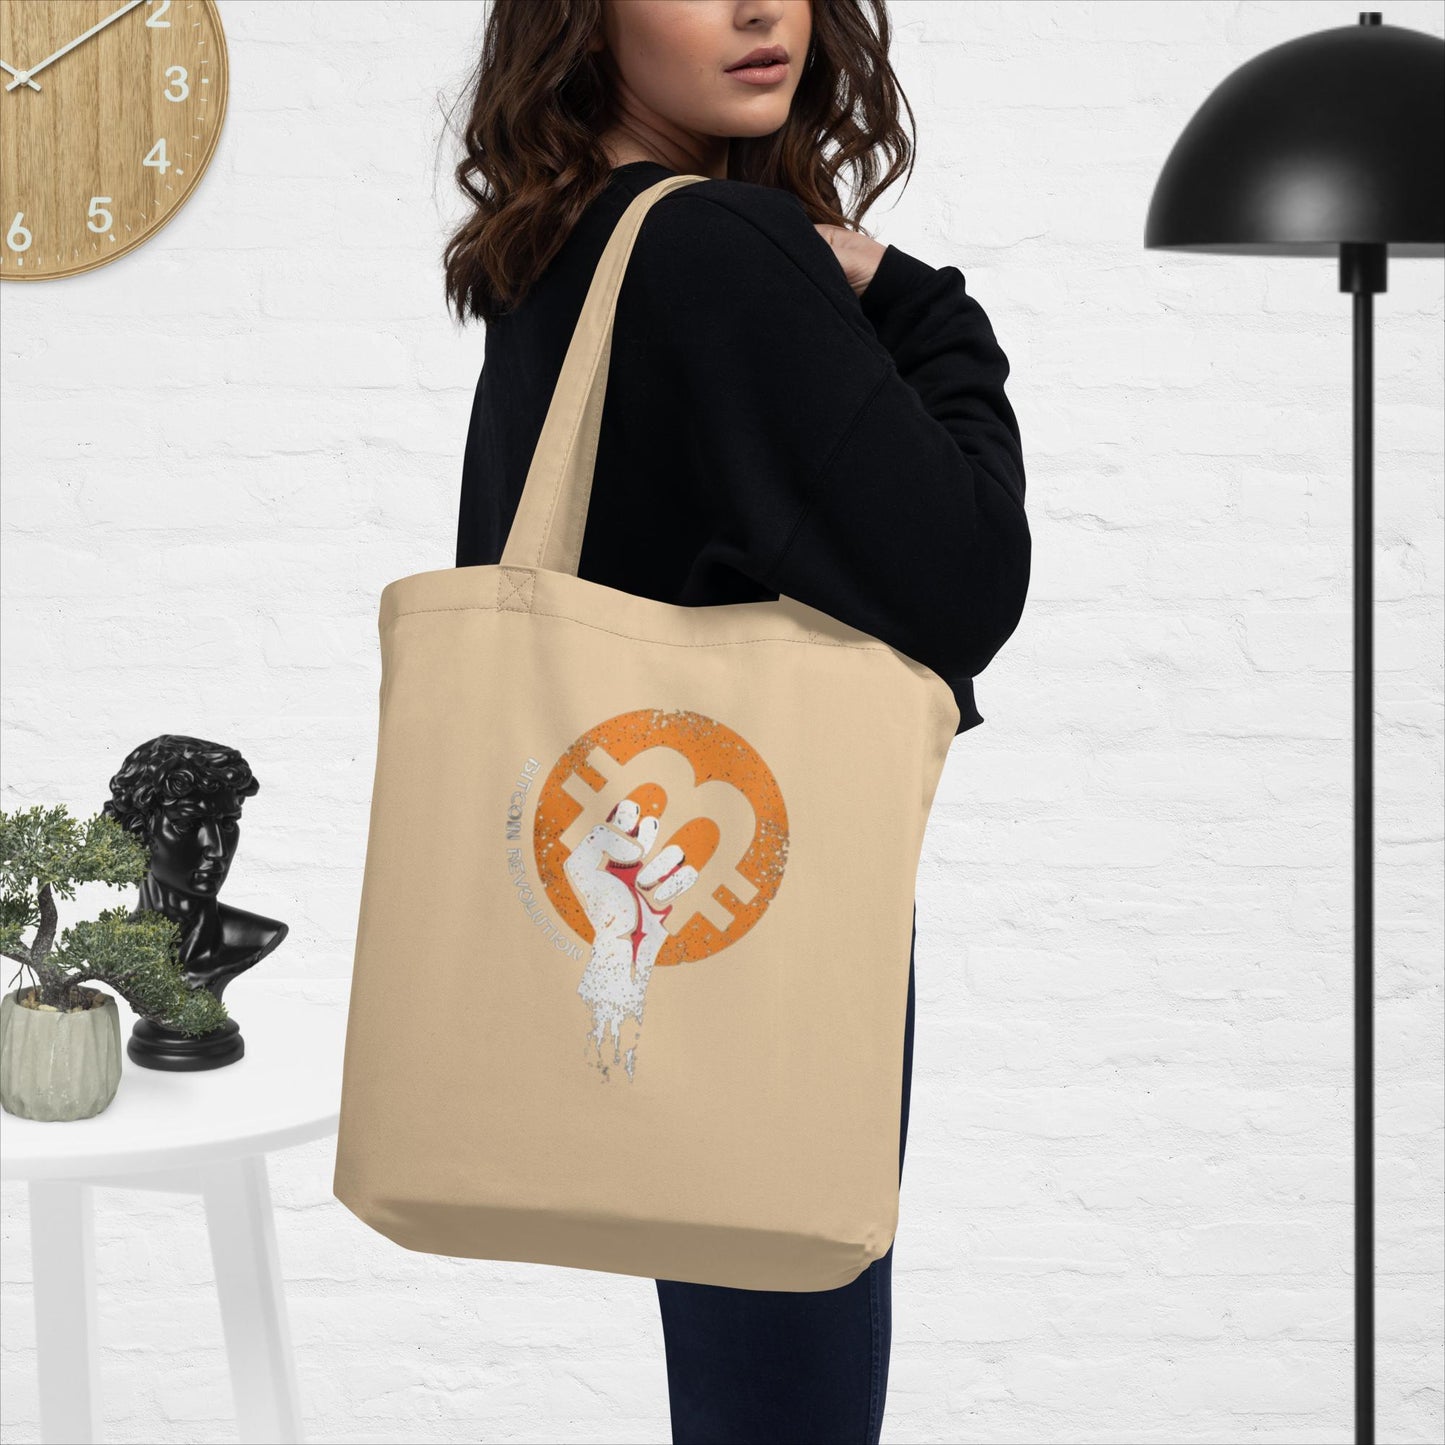 Bitcoin Revolution - Eco Bio Bag